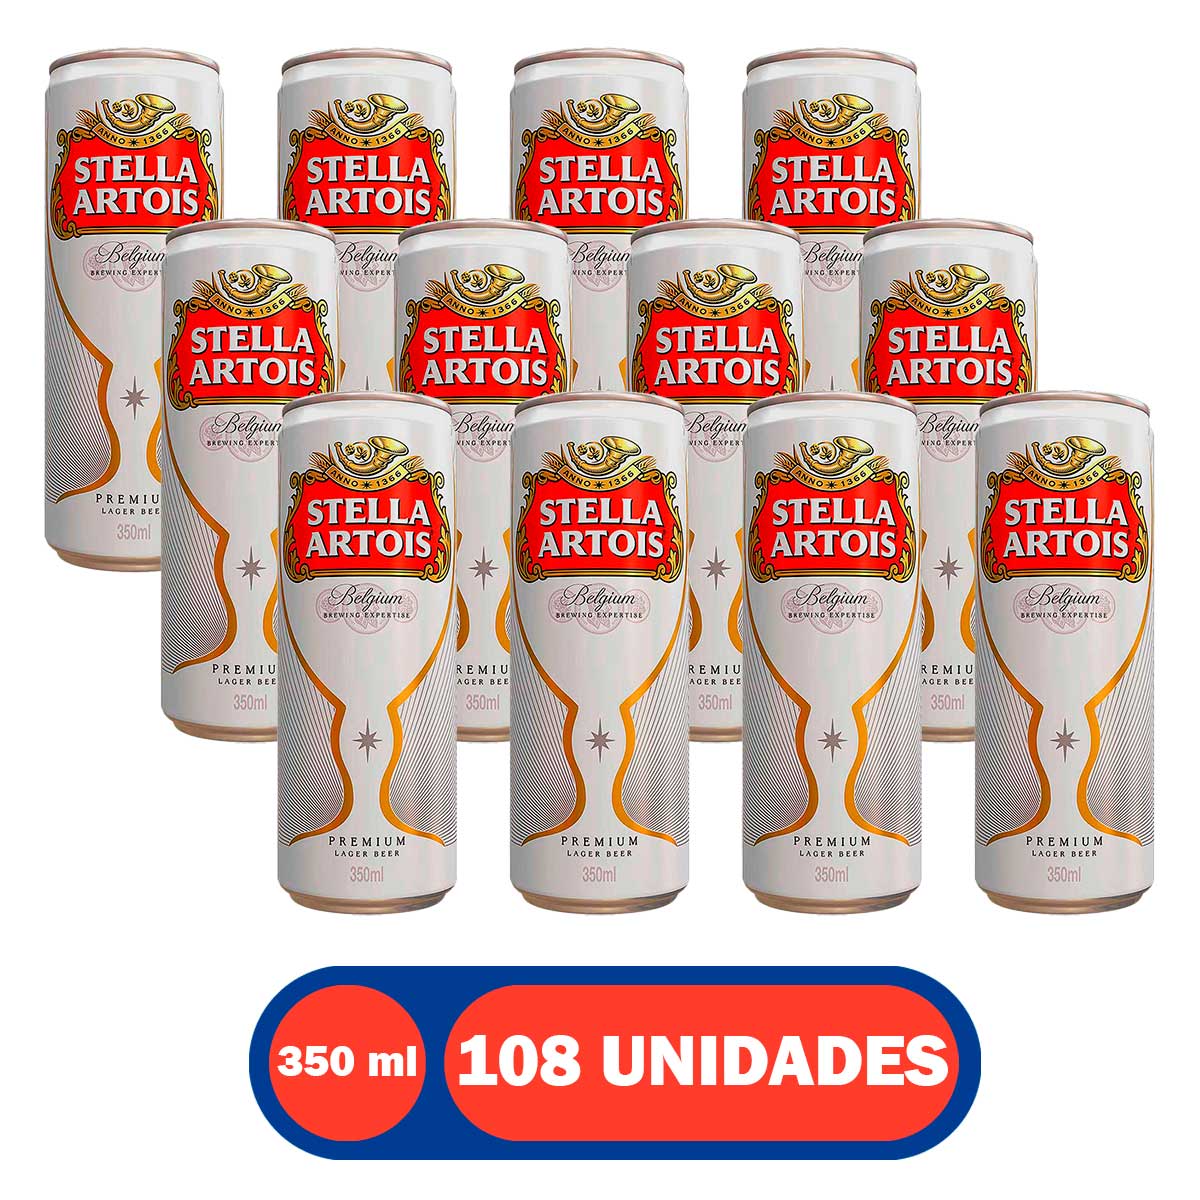 cerveja-stella-artois-puro-malte-350ml-lata-108-unidades-1.jpg